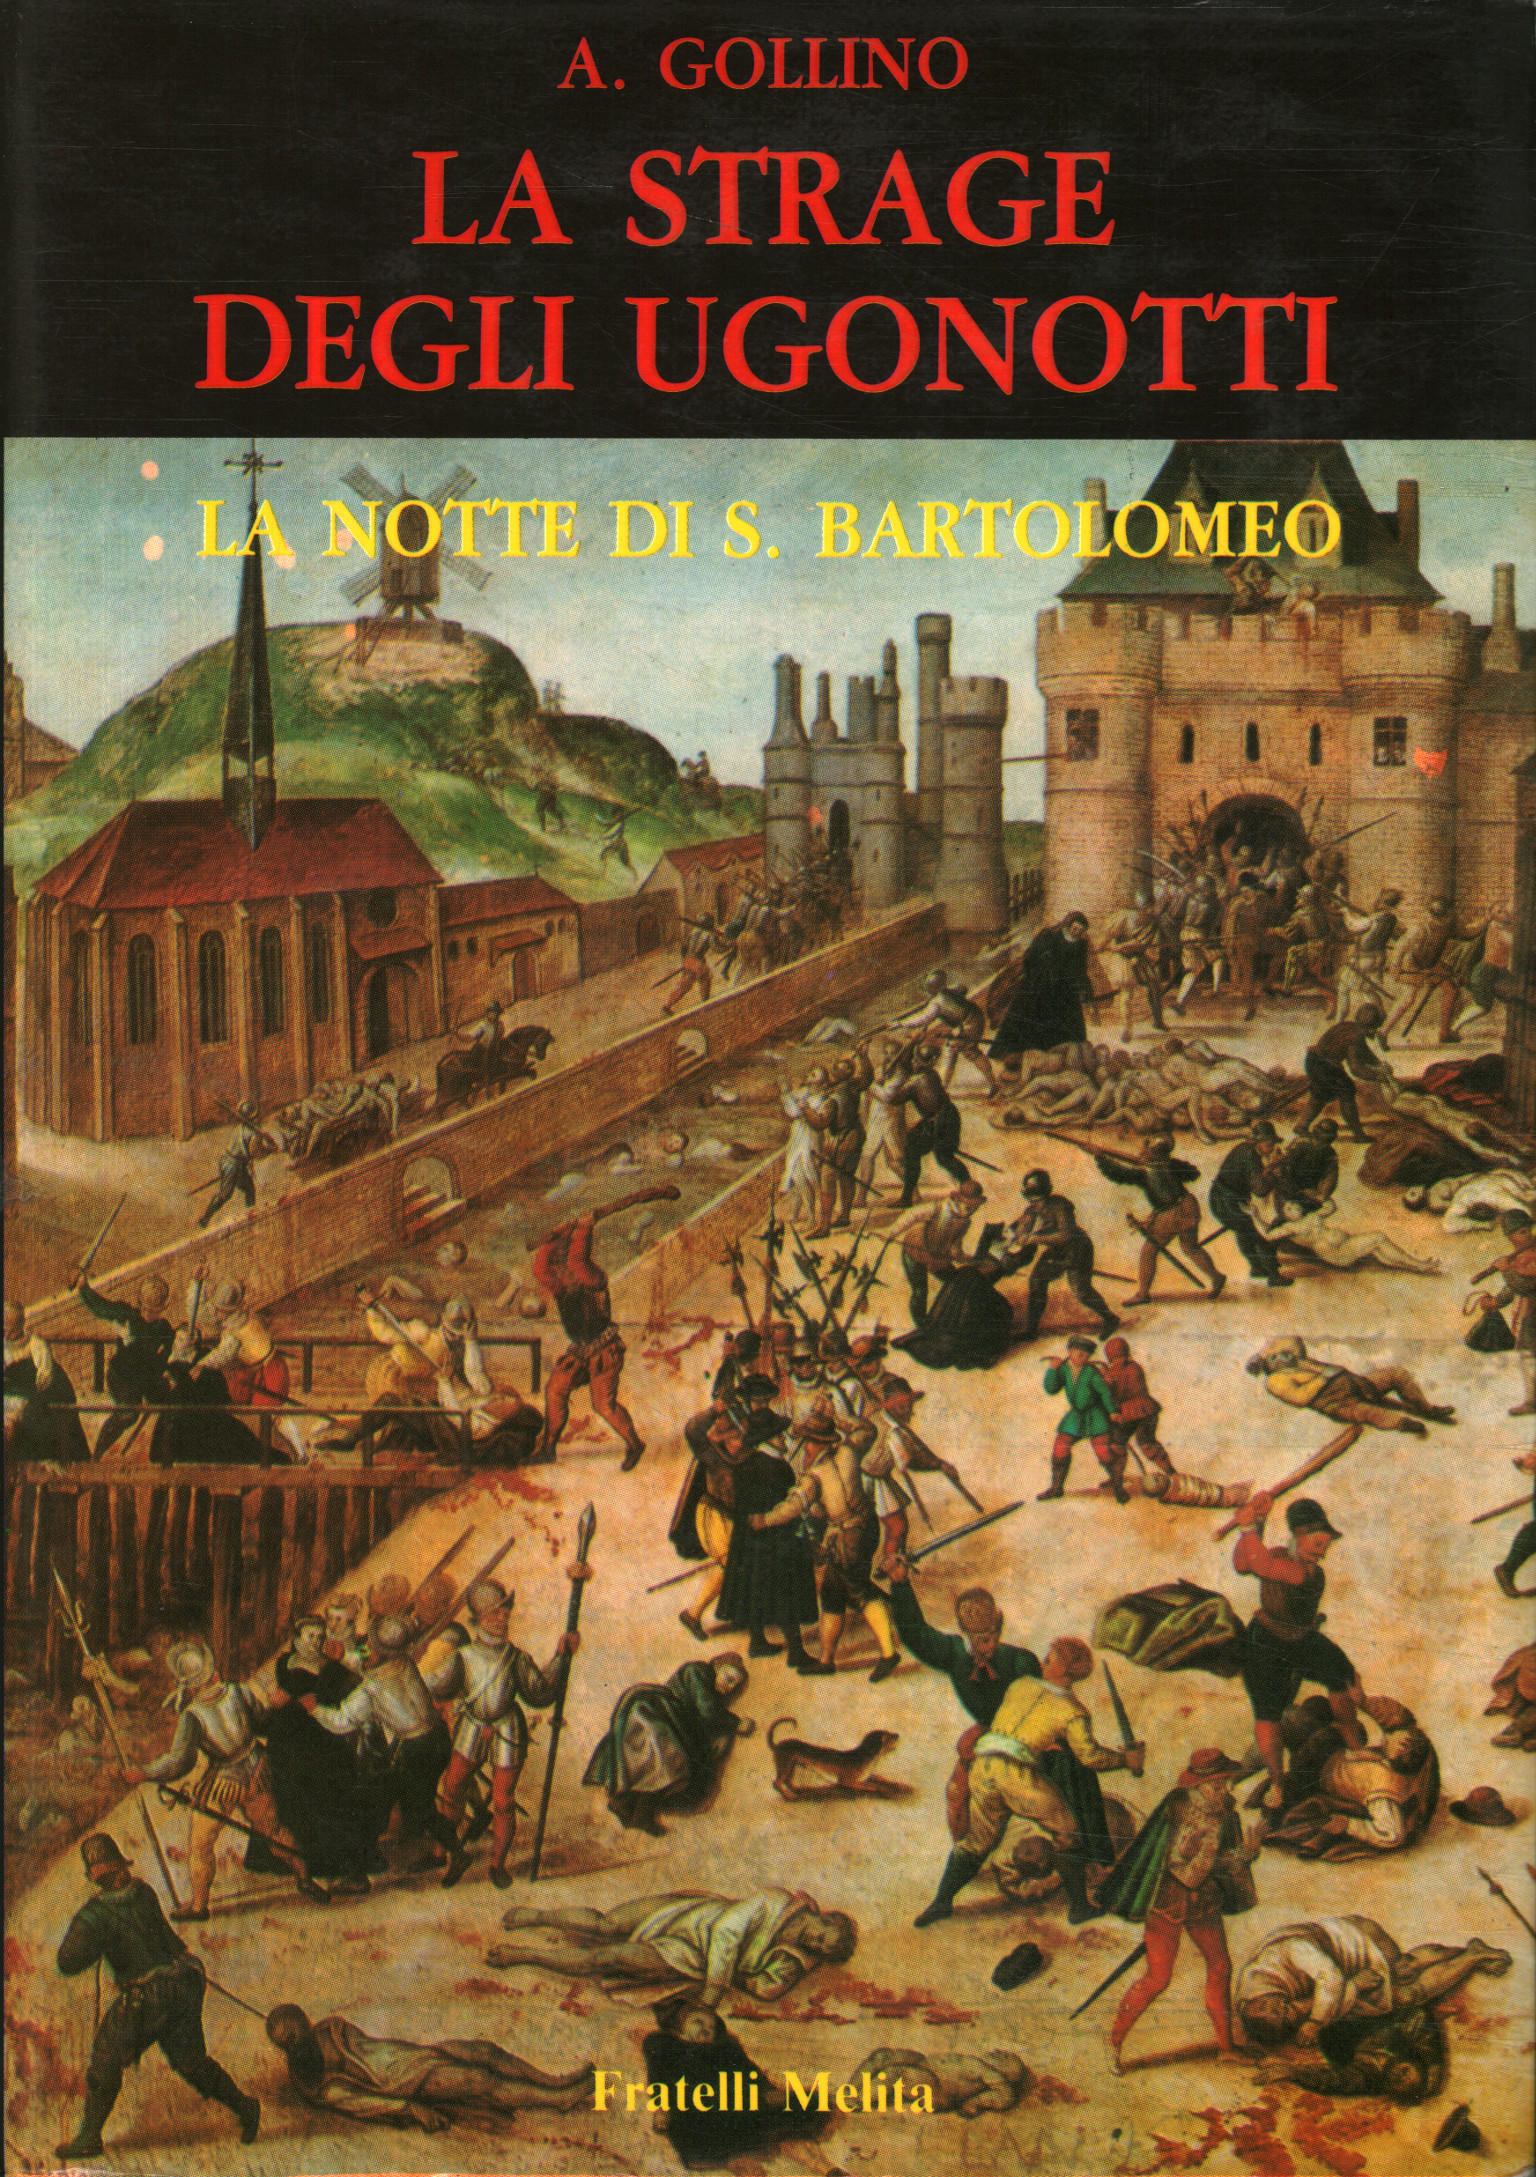 The massacre of the night of San Bartolome